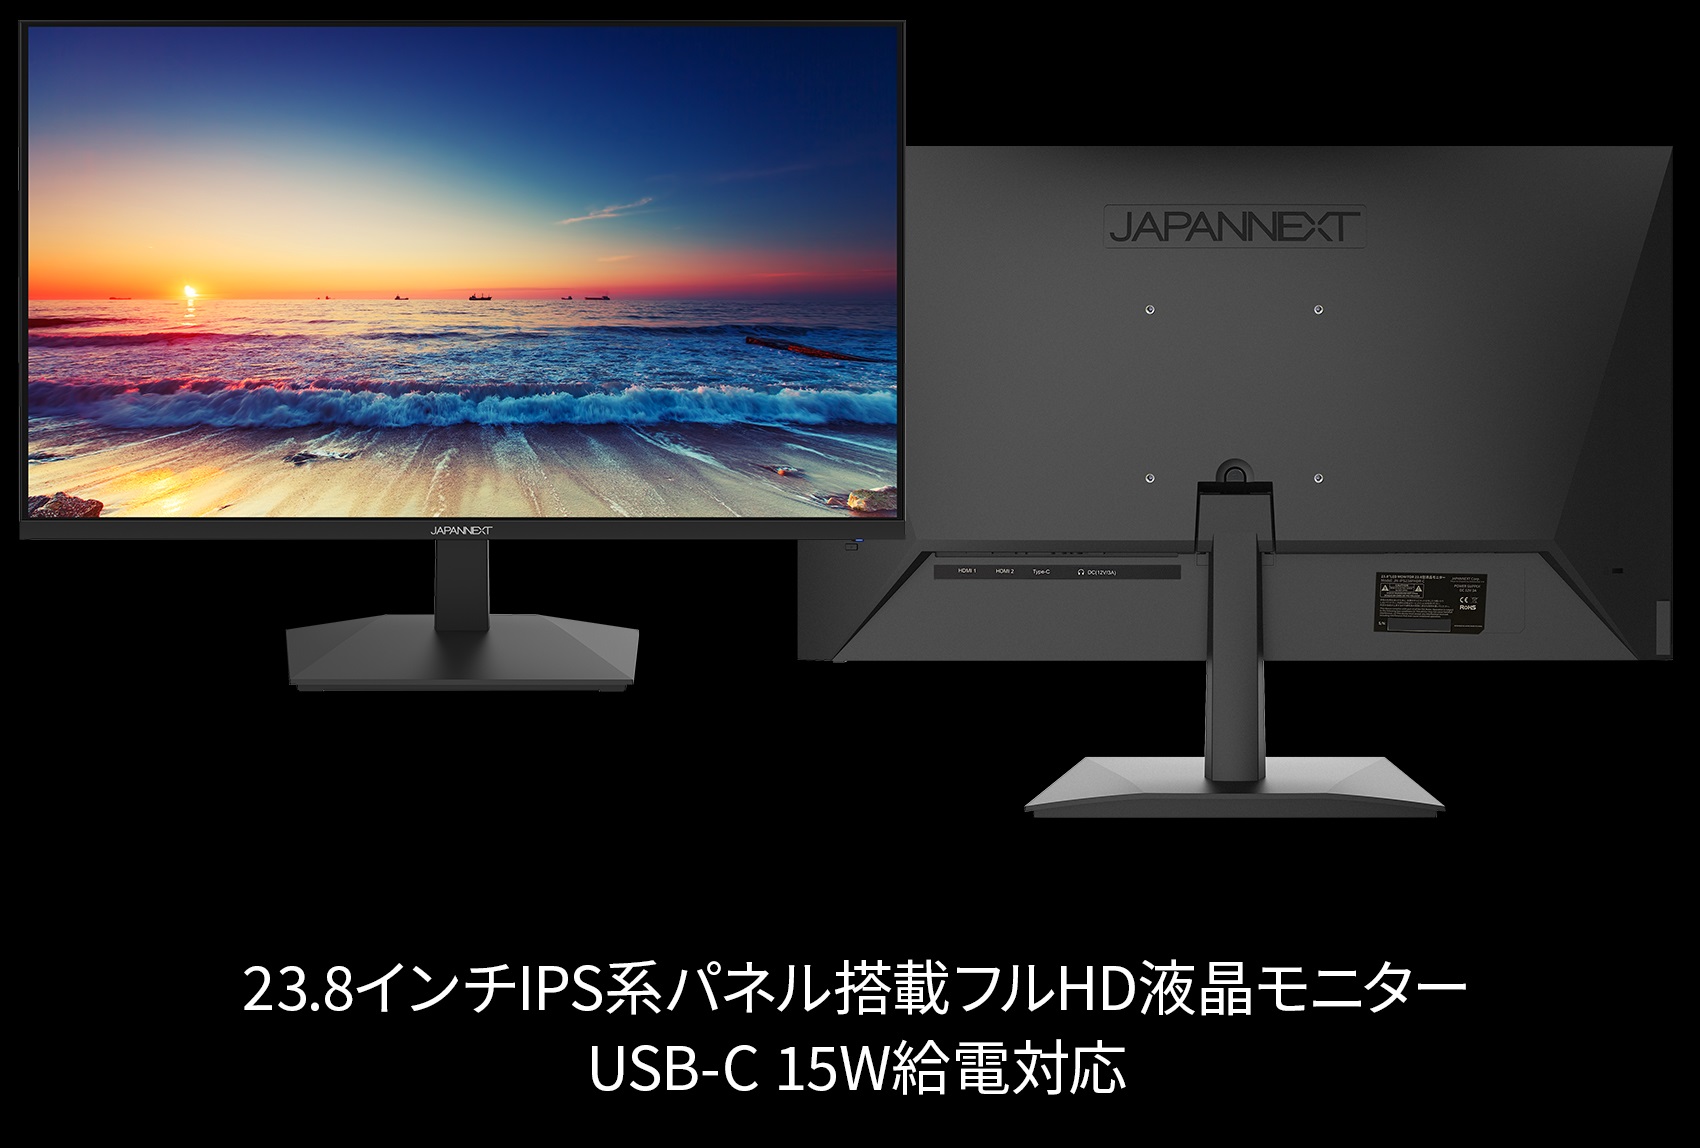 JAPANNEXT 23.8インチ IPS WQHD(2560 x 1440)